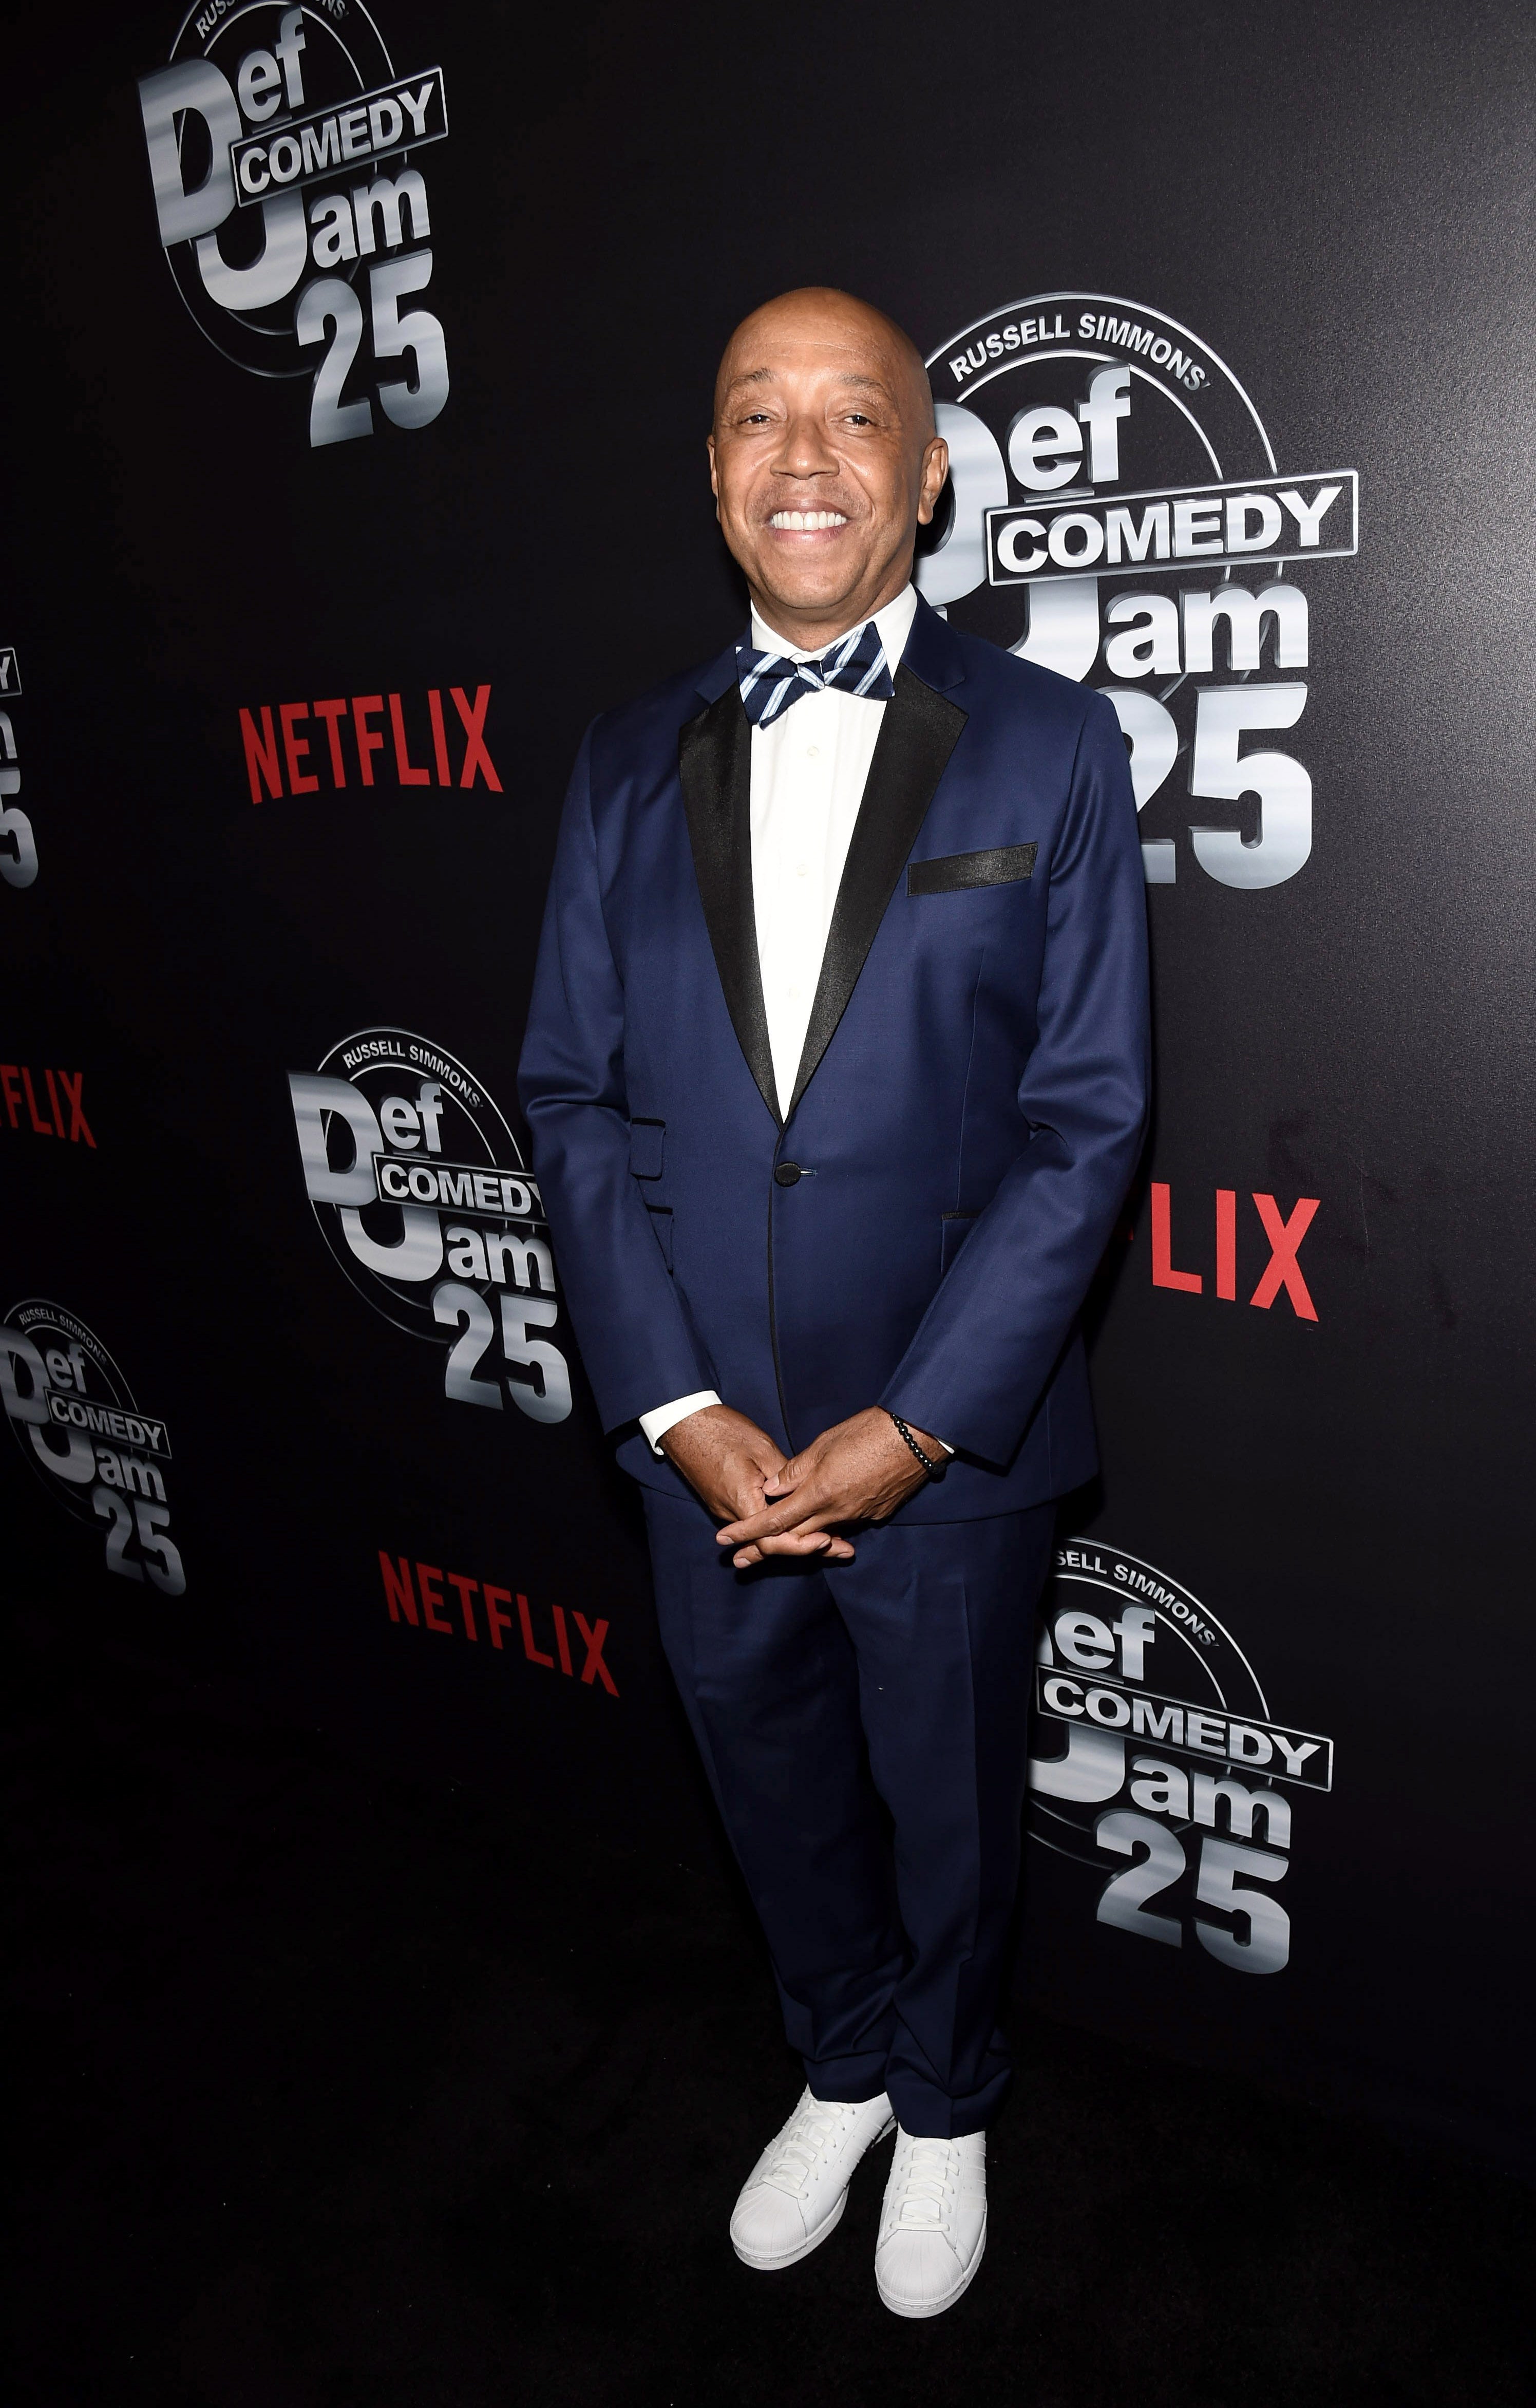 Netflix's 'Def Comedy Jam 25' Event Was A Star-Studded Celebration ...